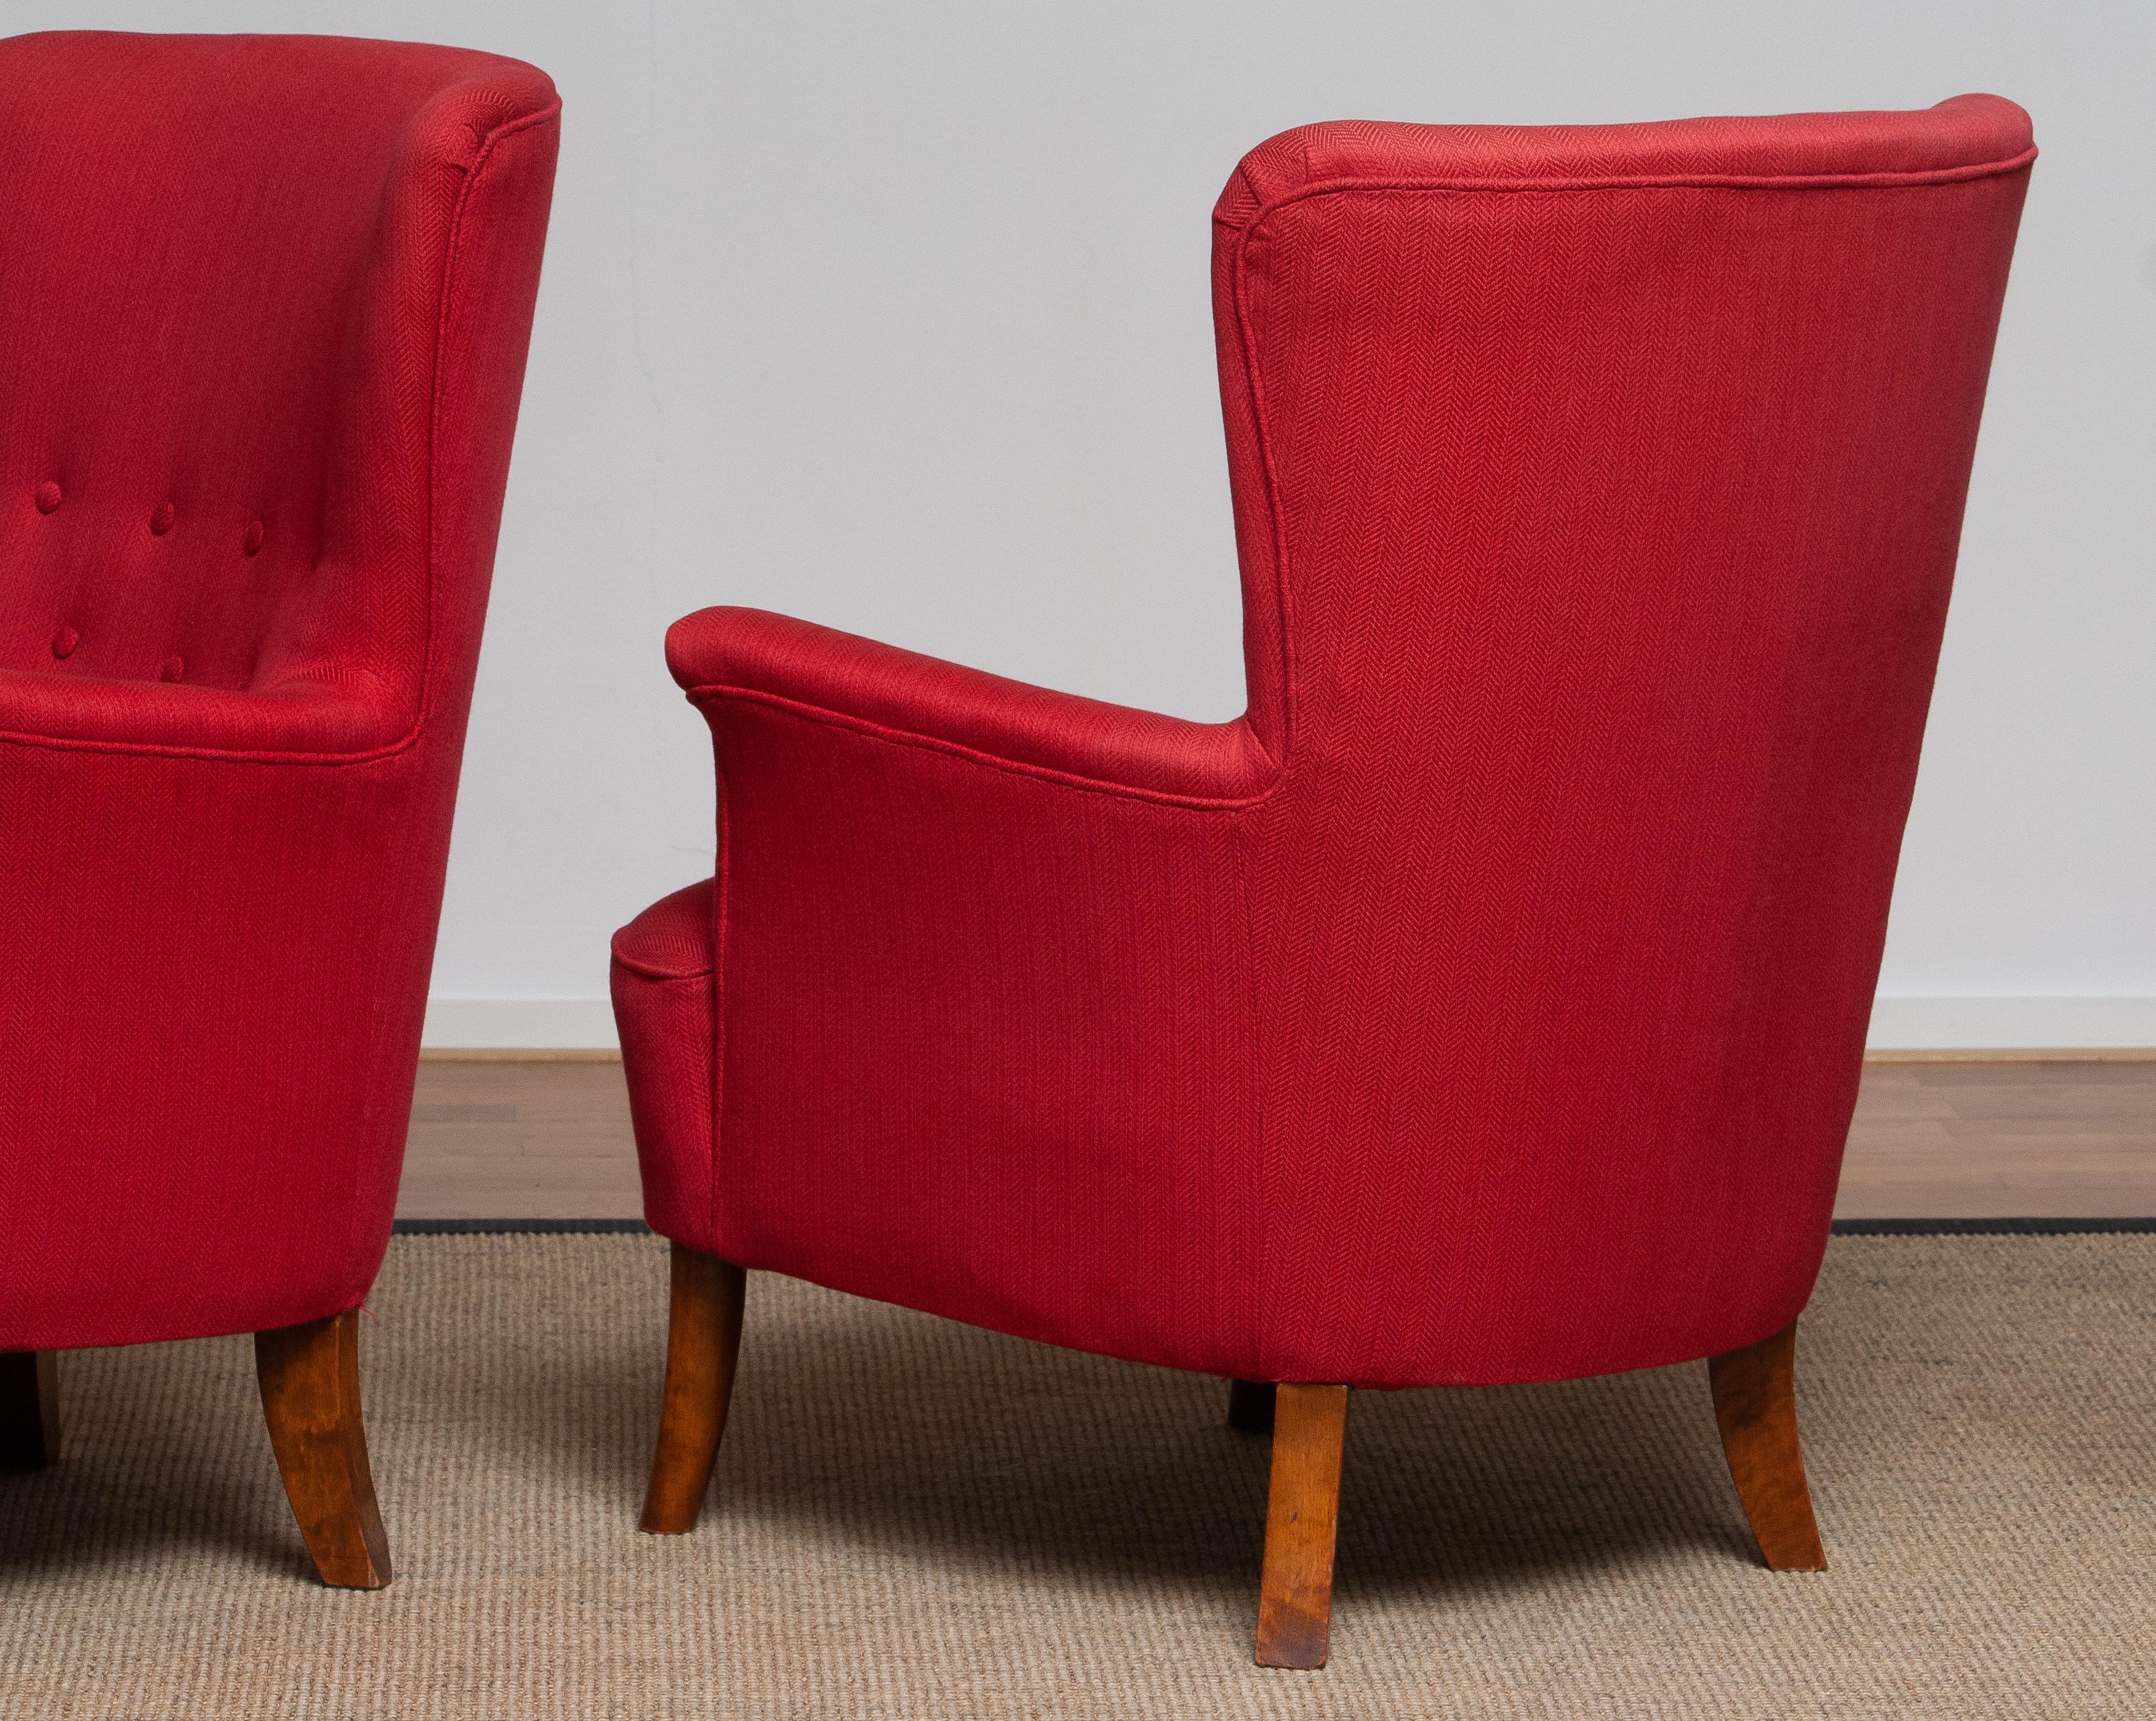 1940s, Pair of Fuchsia Easy or Lounge Chair by Carl Malmsten for OH Sjogren 1